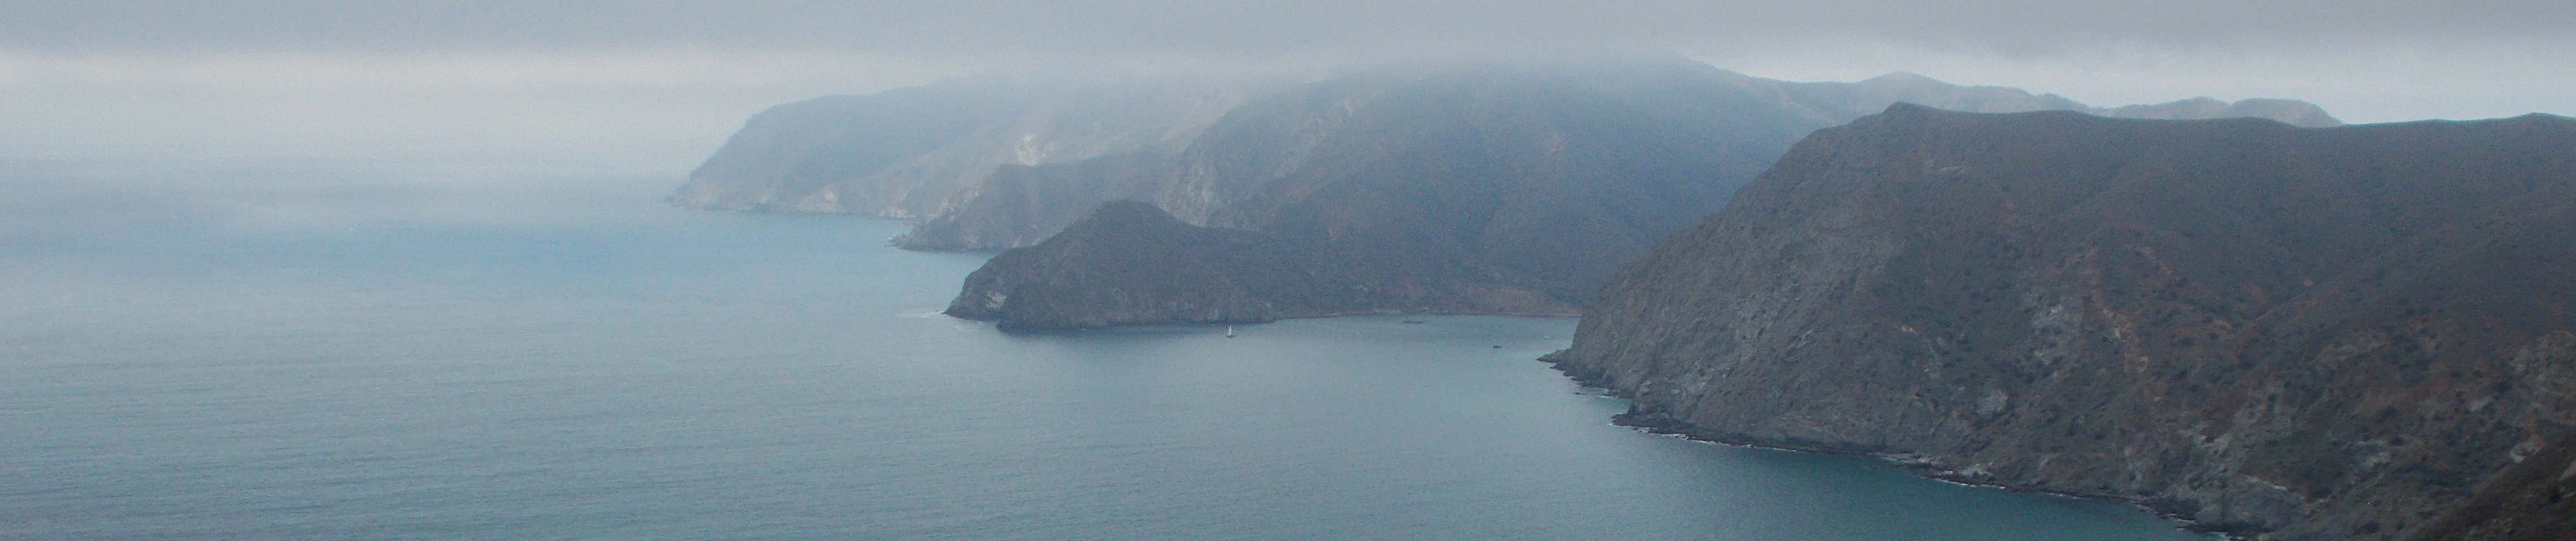 Santa Catalina Island Coastline